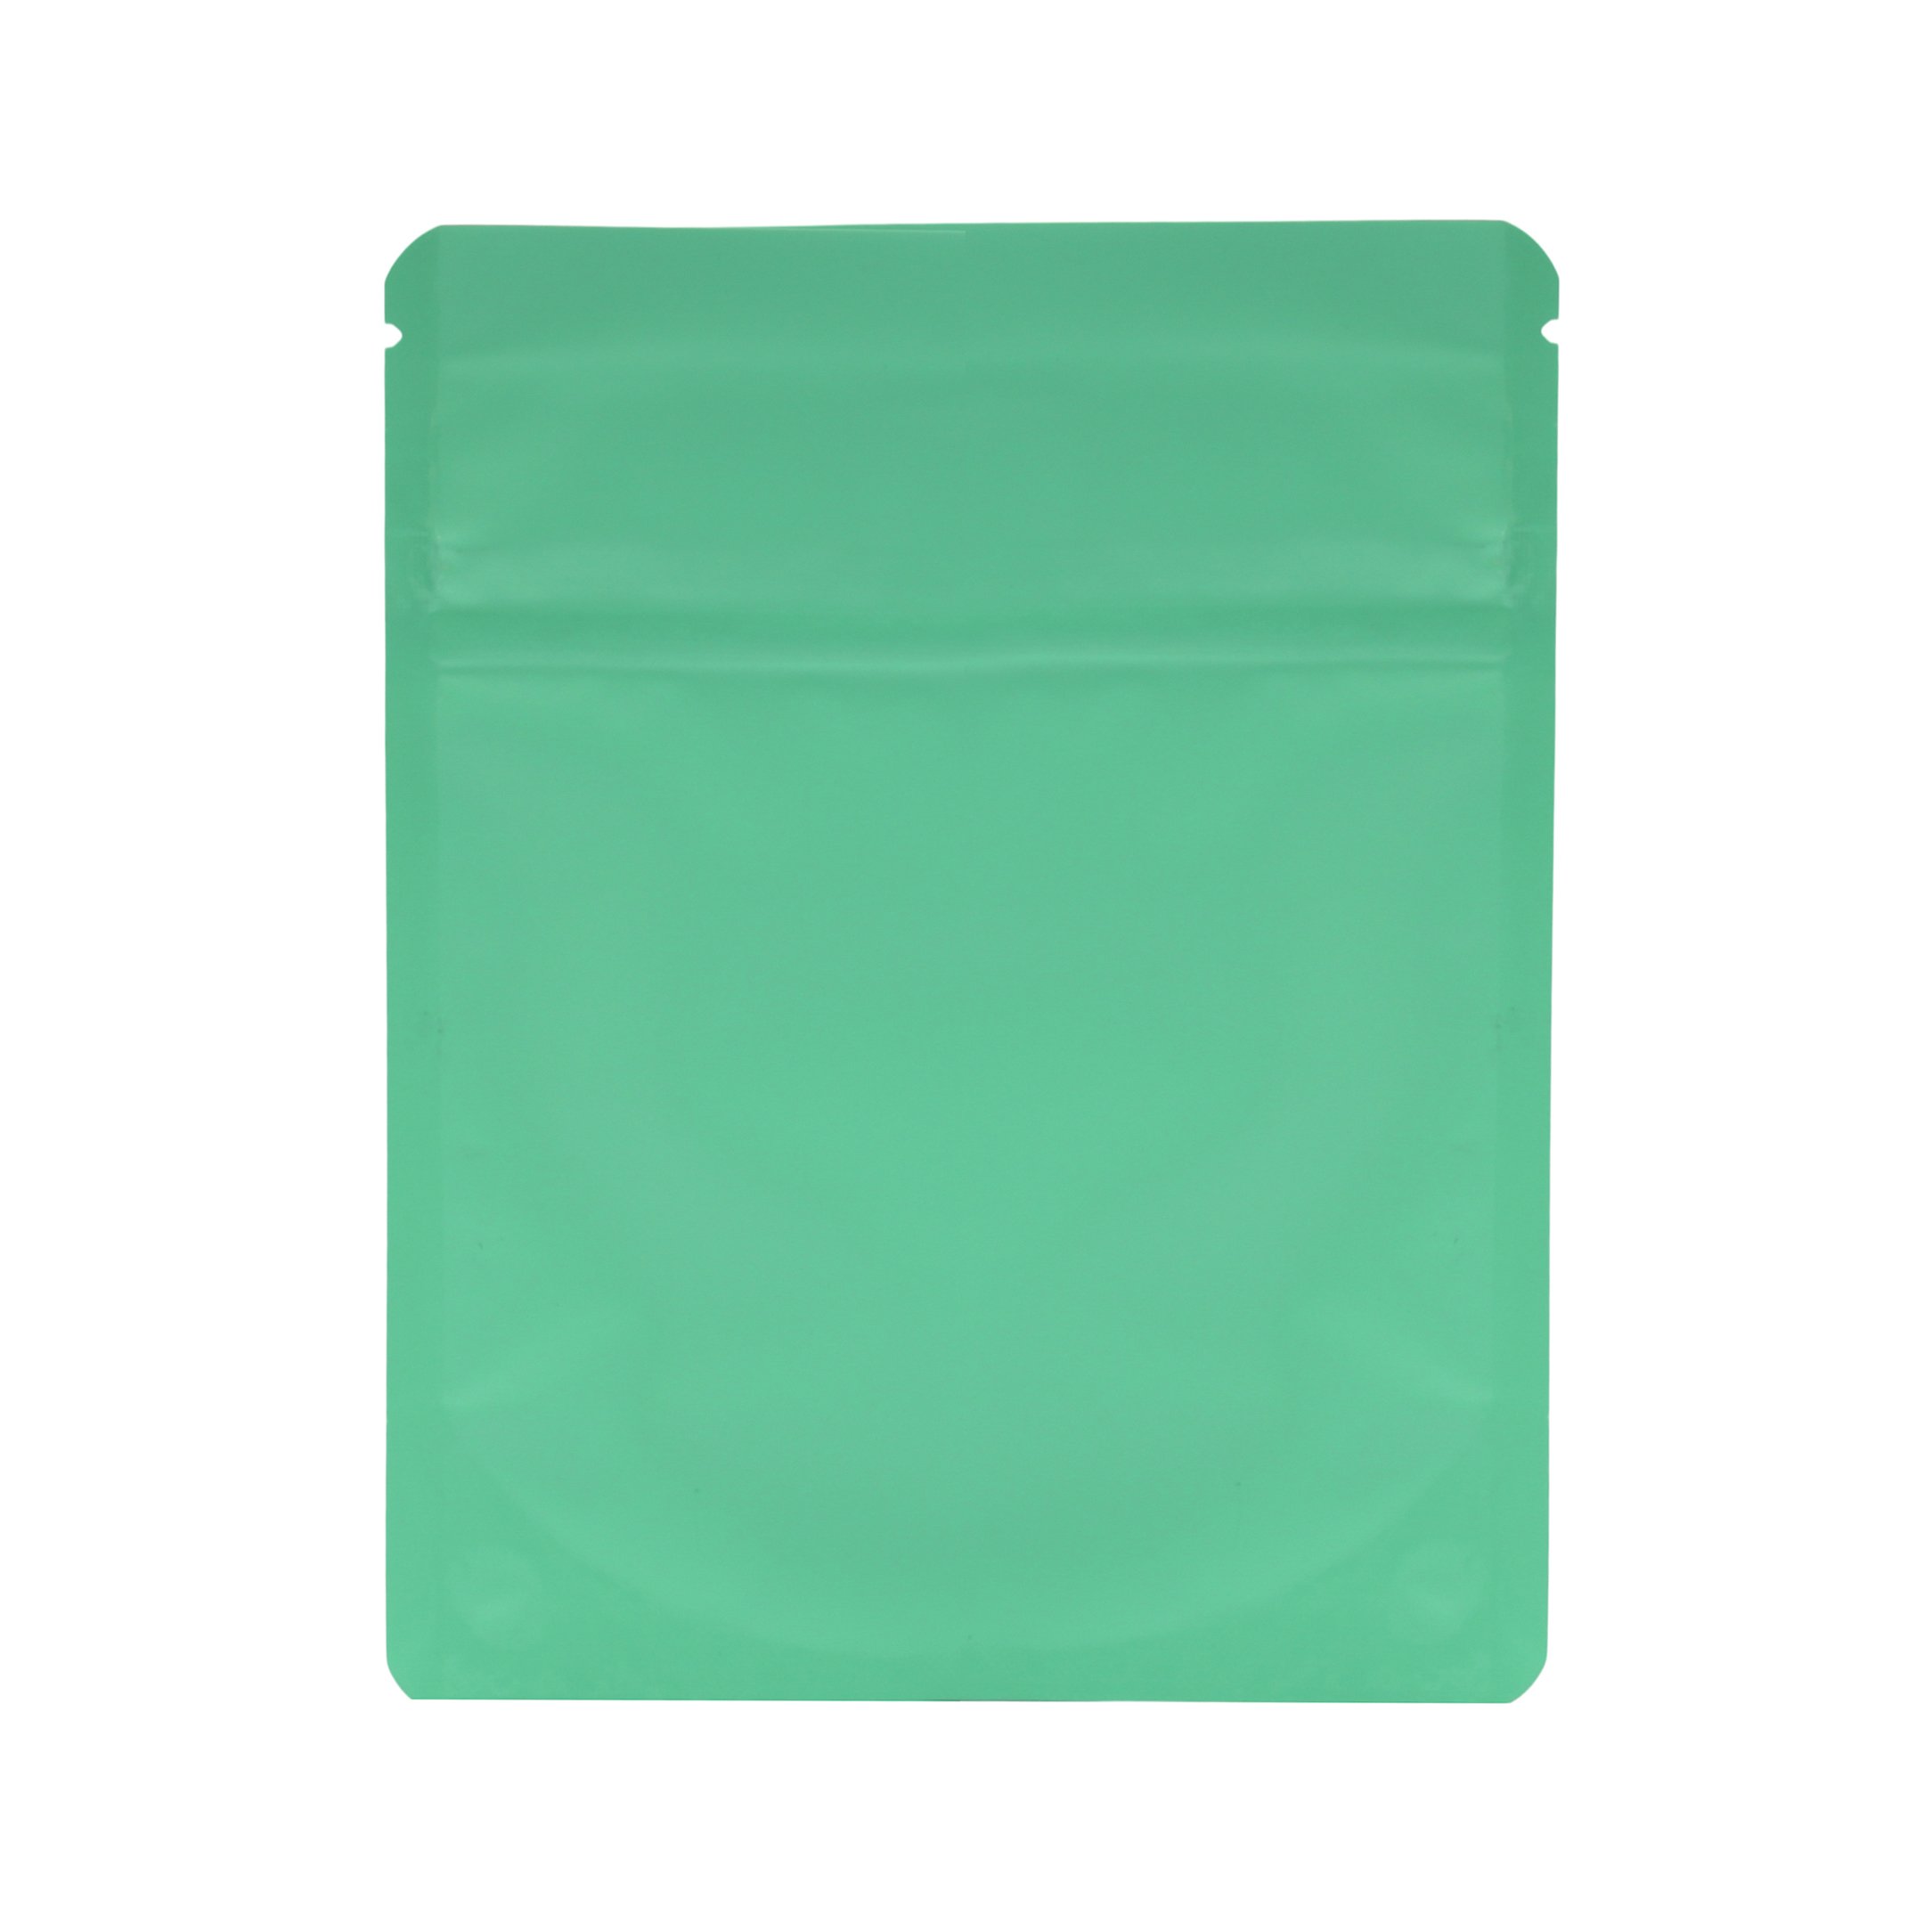 Bag King Child-Resistant Opaque Bag (1 gram) 3.5” x 4.5” Matte Seafoam